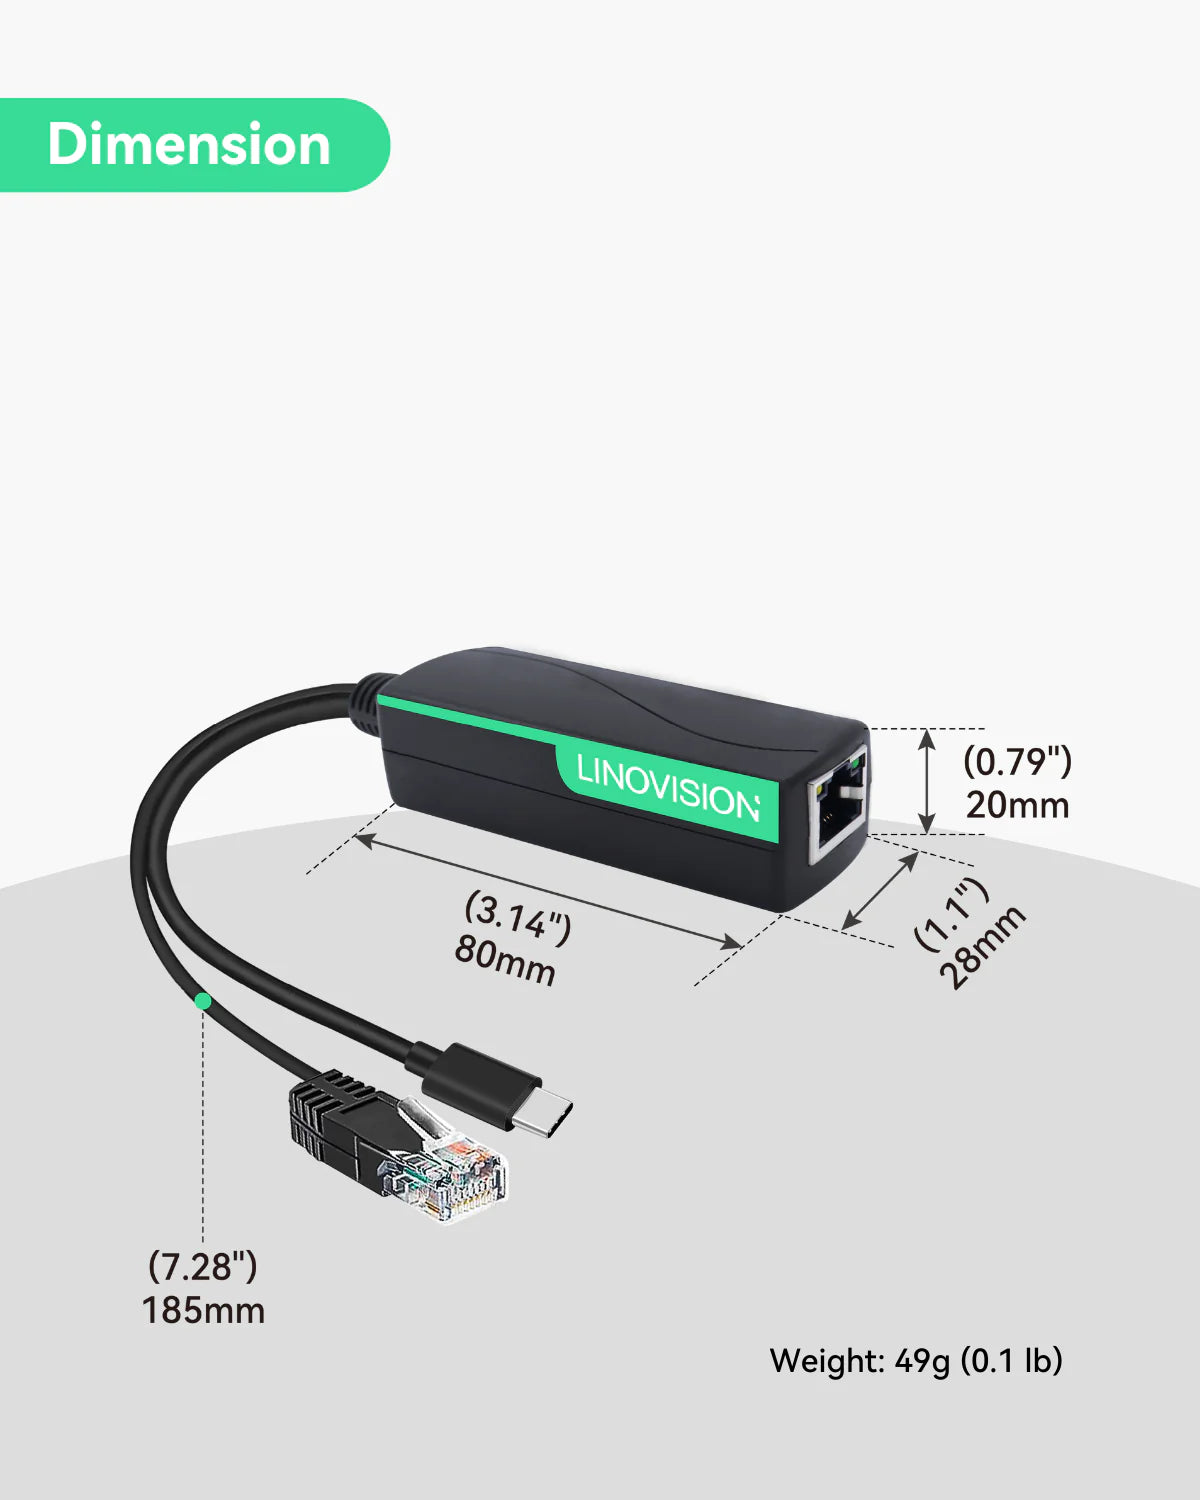 Switch Ethernet Lan Gigabit RJ45 10 100 1000 Mbps 8 Ports avec Alimentation